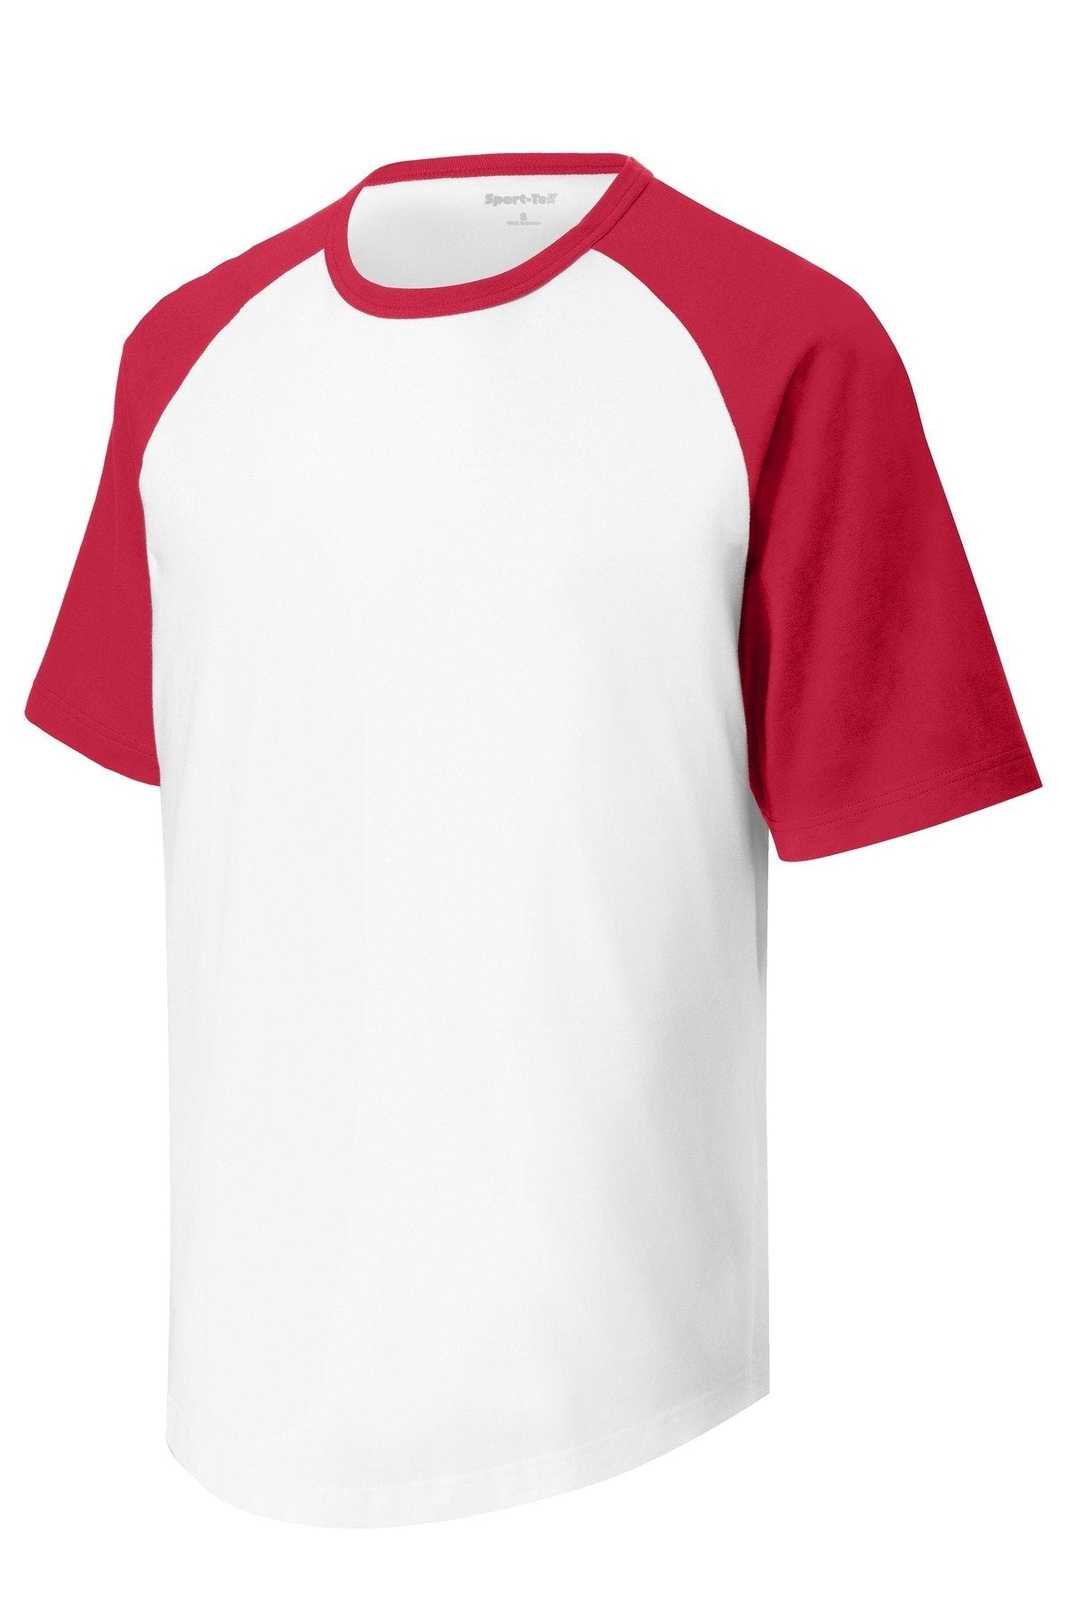 Sport-Tek T201 Short Sleeve Colorblock Raglan Jersey - White Red - HIT a Double - 2